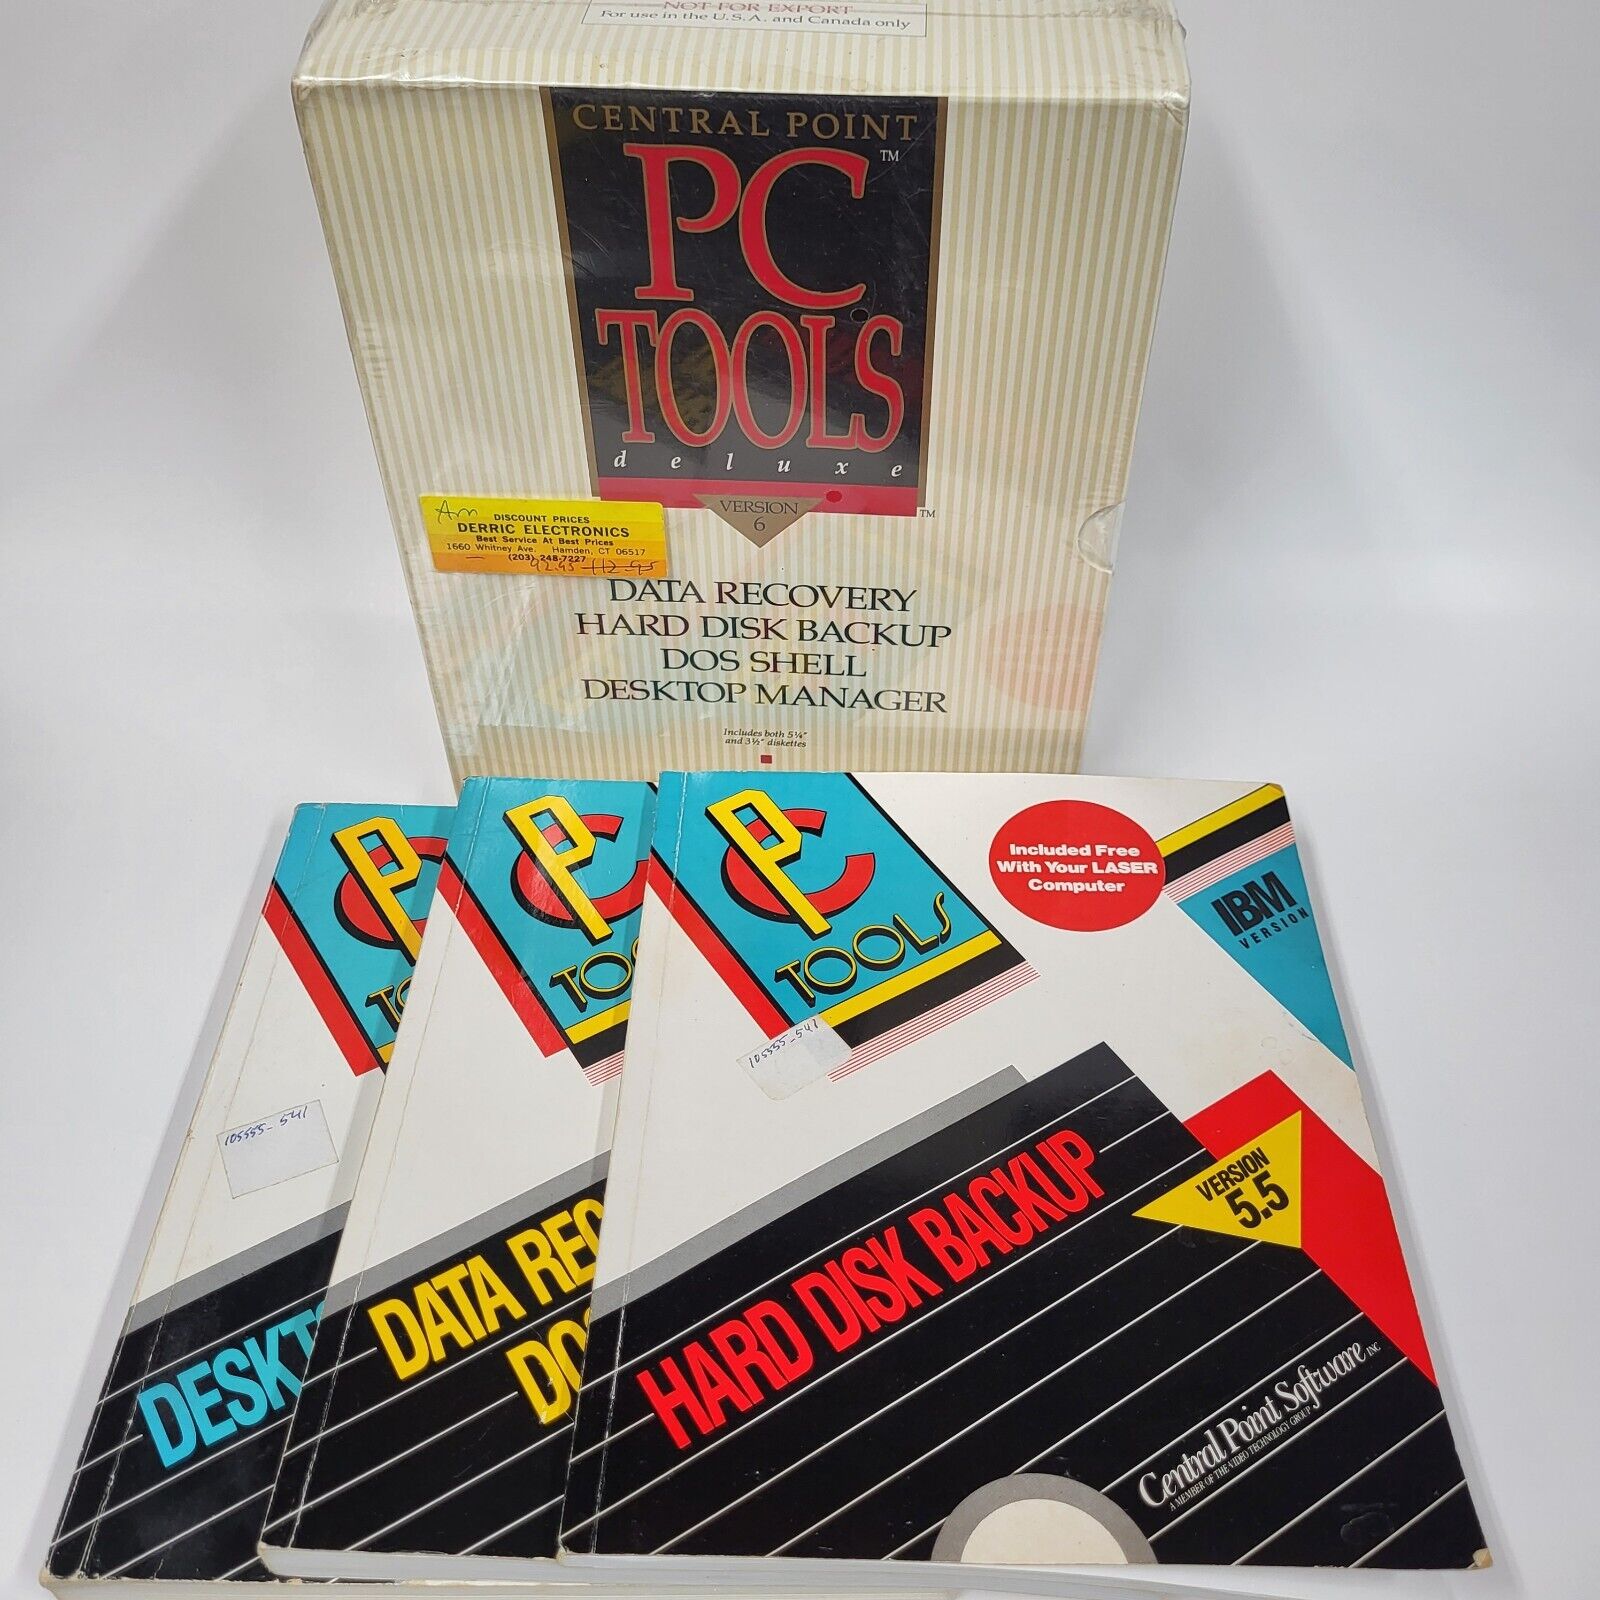 Central Point PC Tools Deluxe Vintage Version 6 Desktop Manager SEALED & books